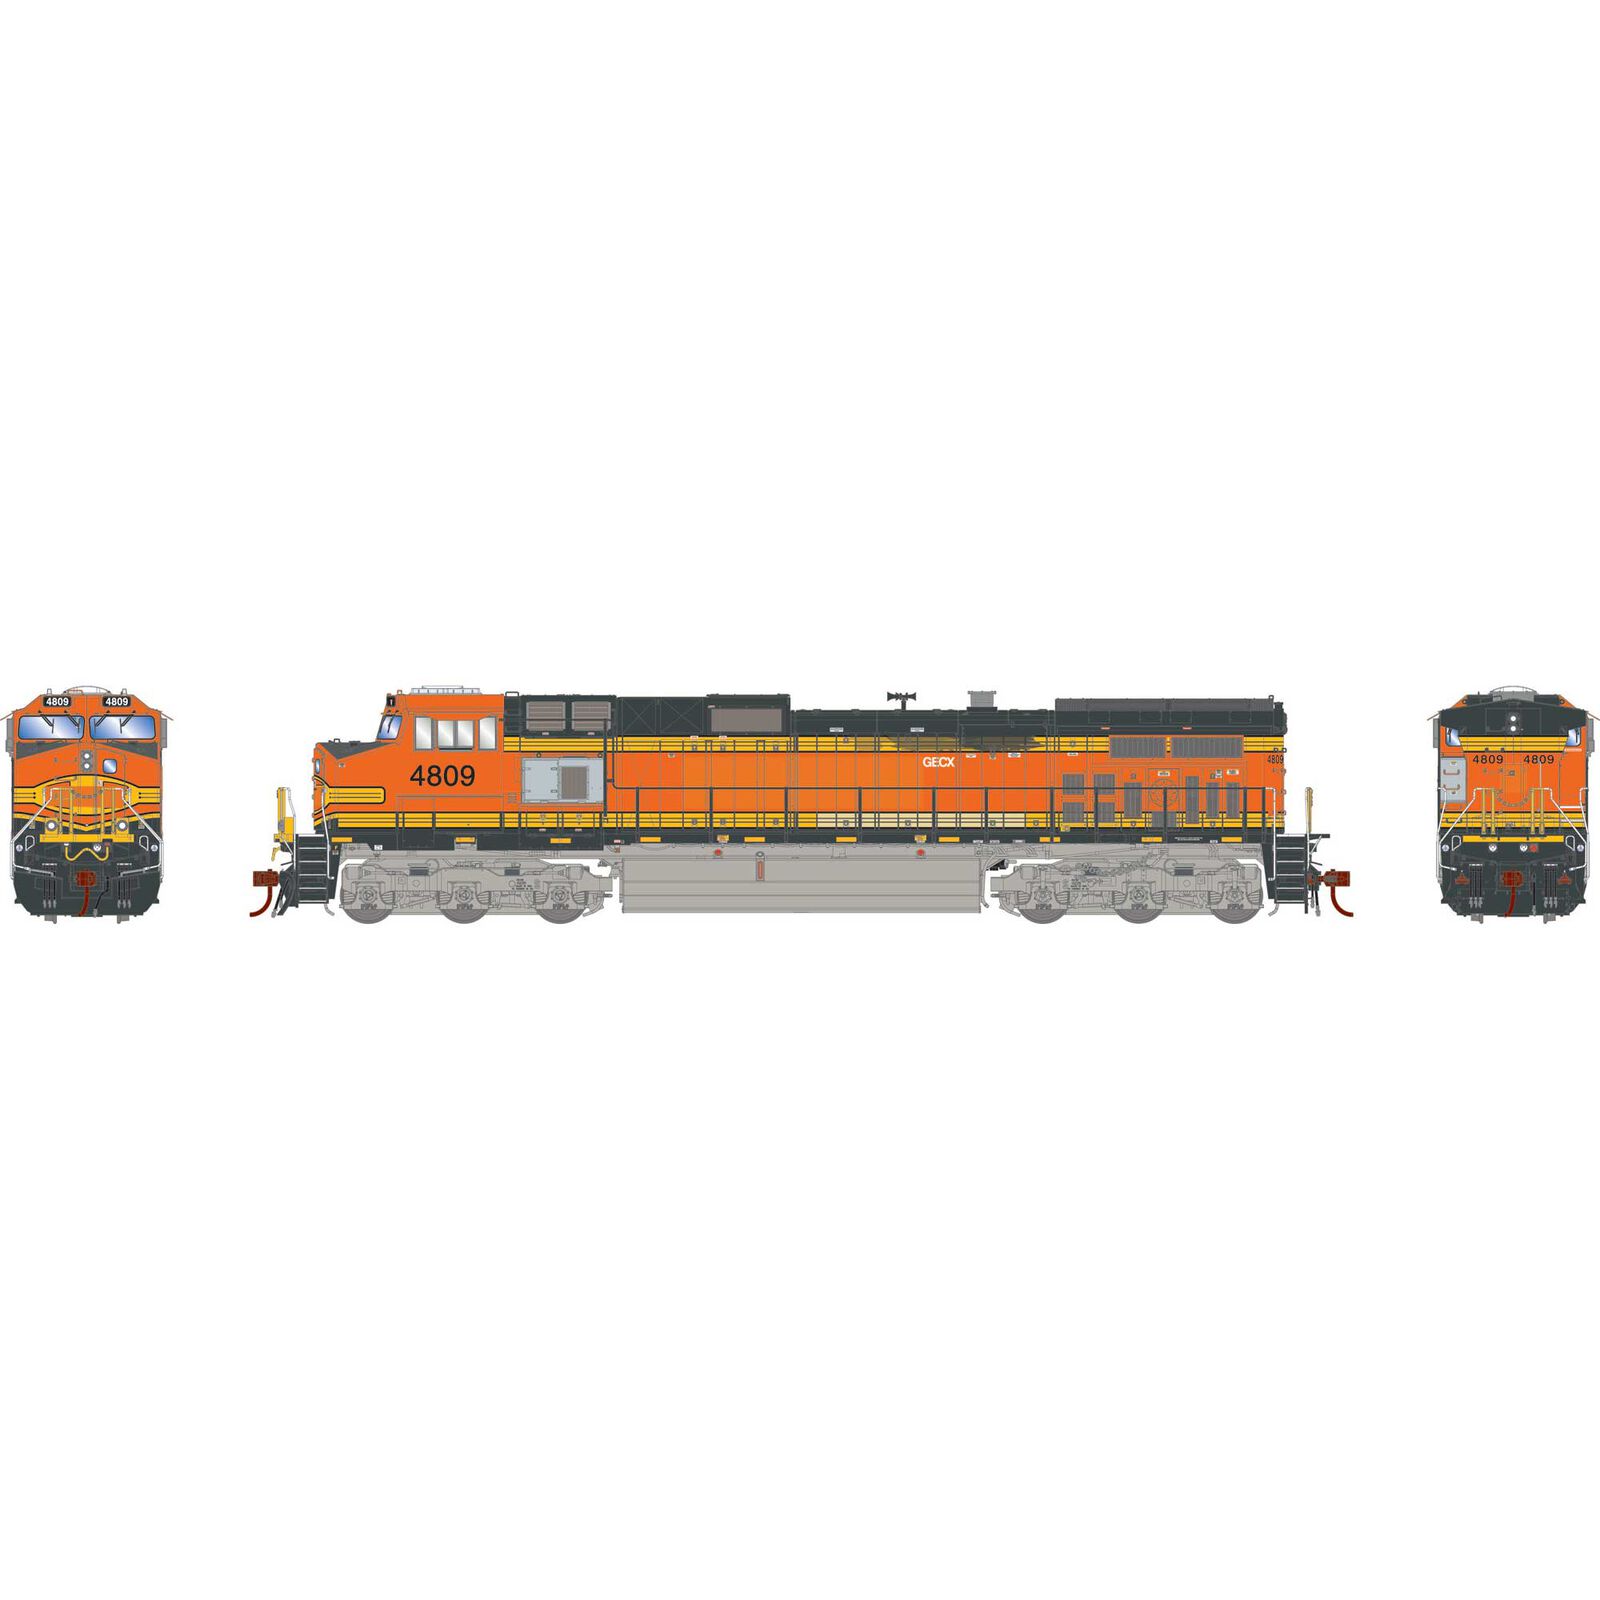 HO Dash 9-44CW Locomotive, GECX #4809